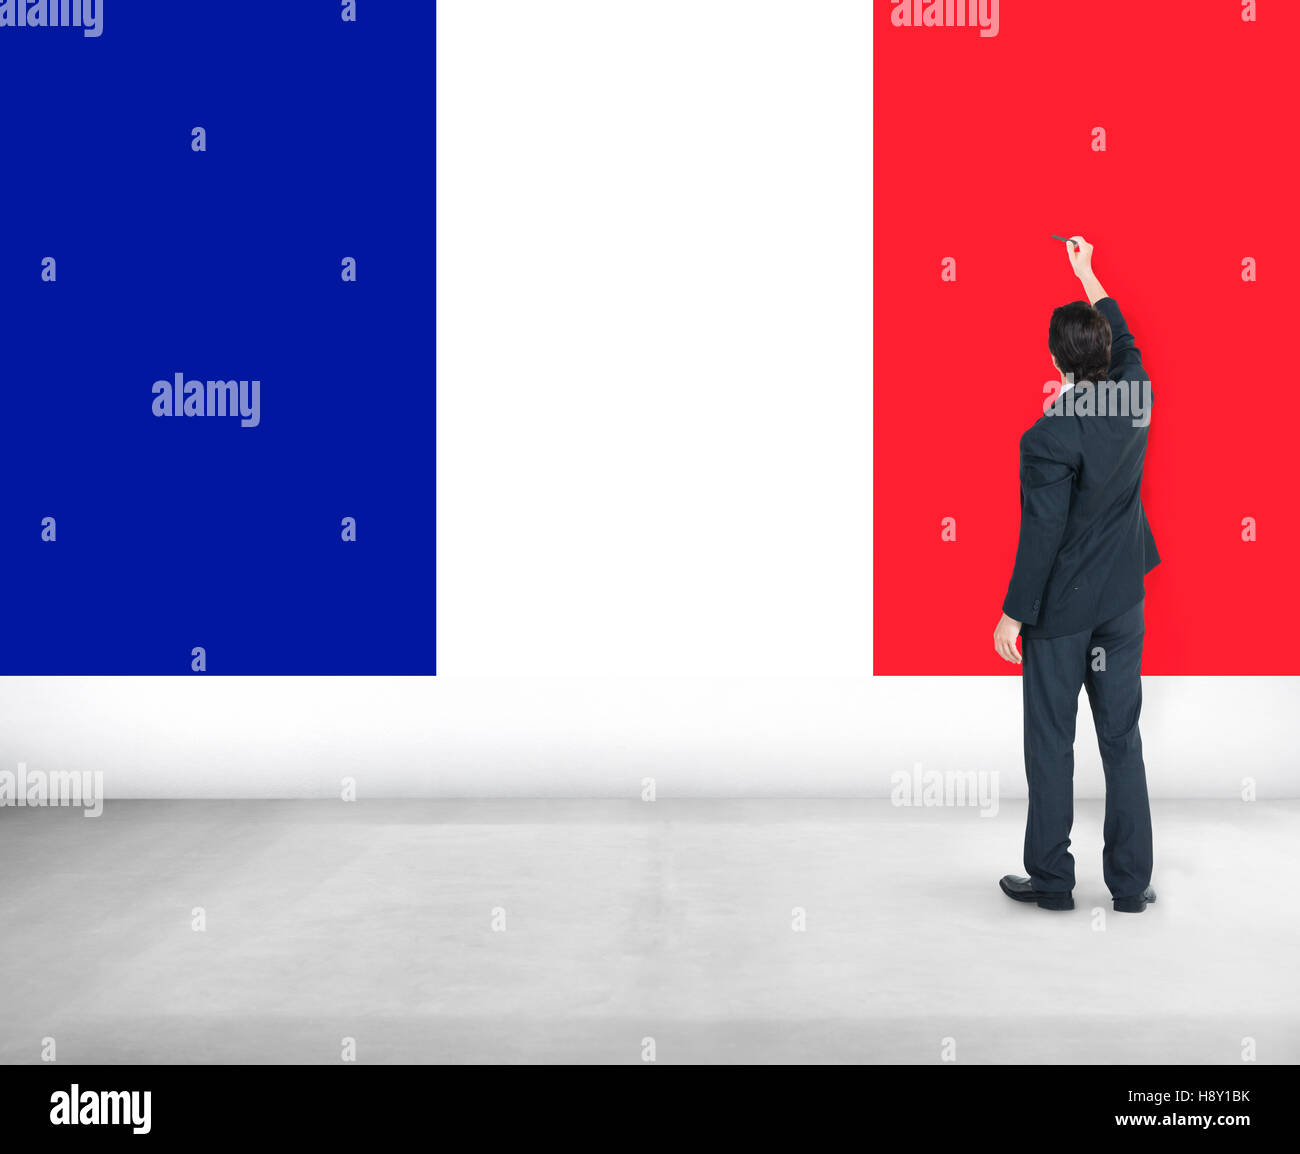 Francia la bandera del país nacionalidad cultura libertad concepto Foto de stock